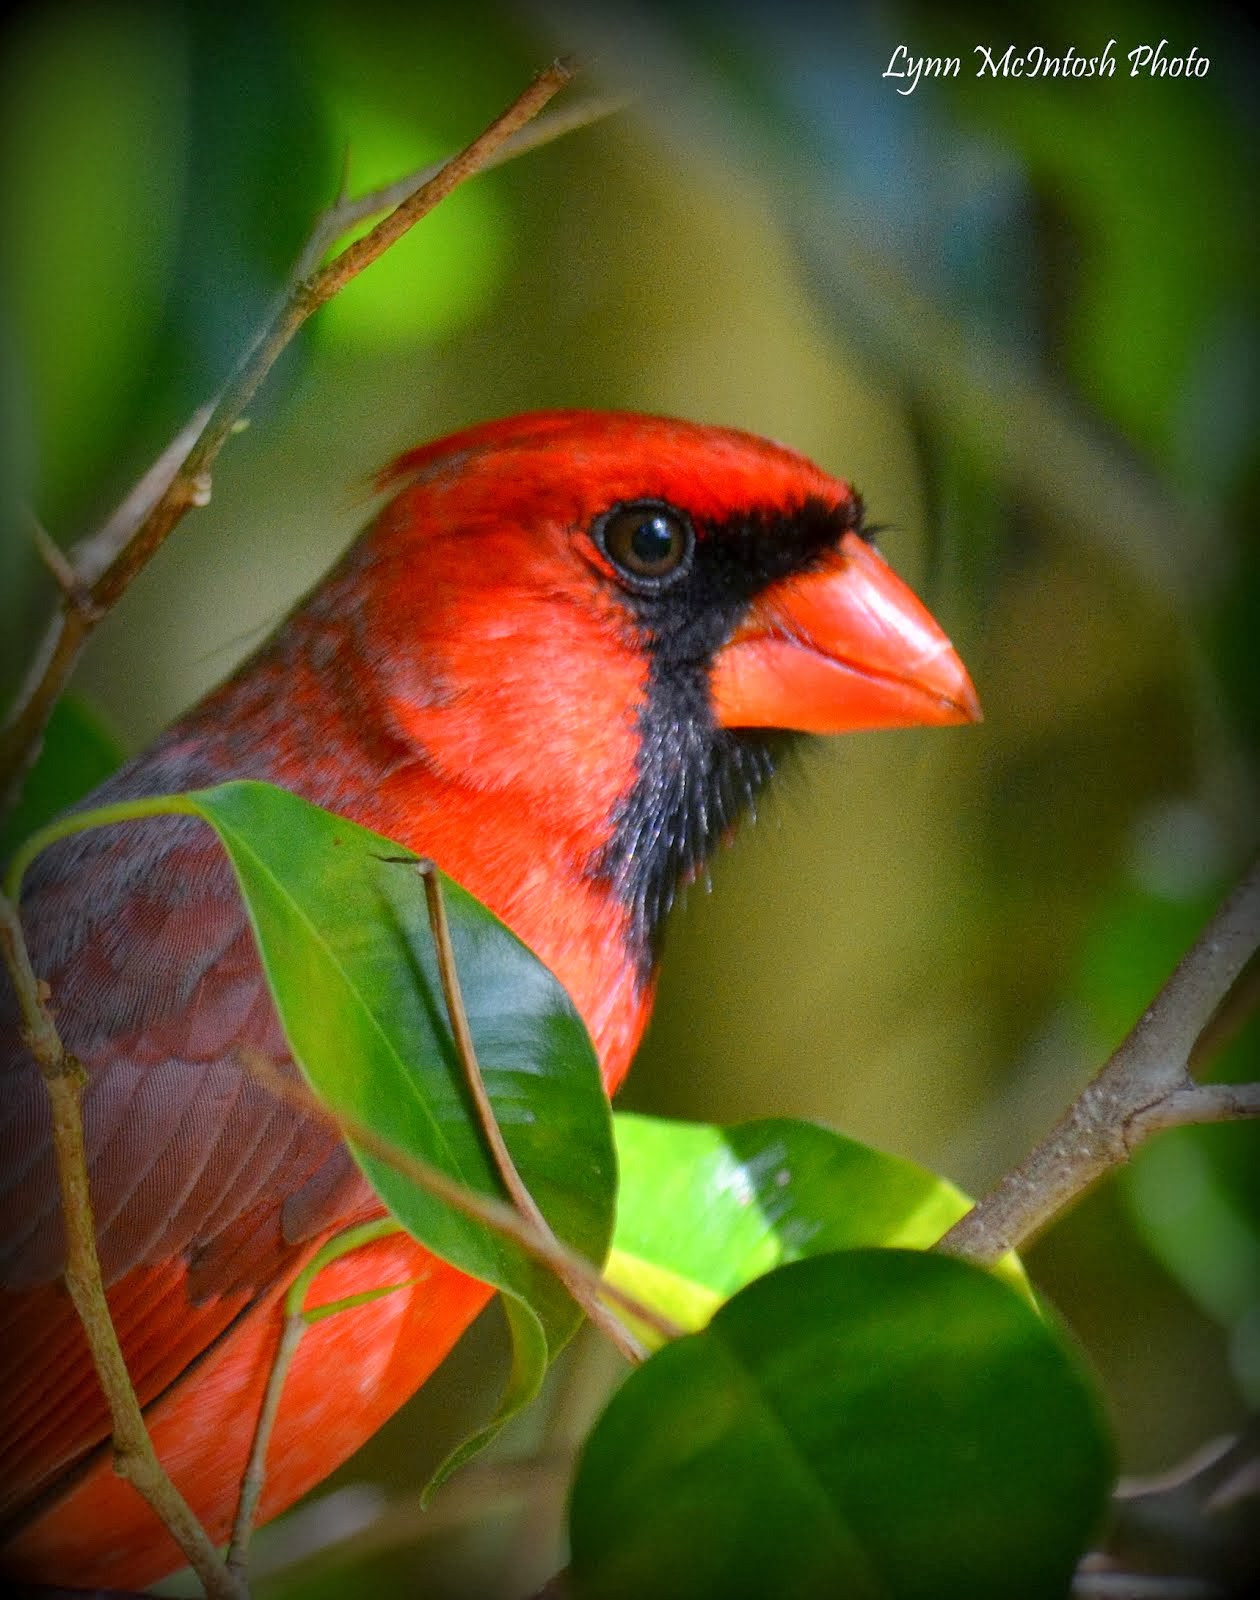 Chirpy the Cardinal